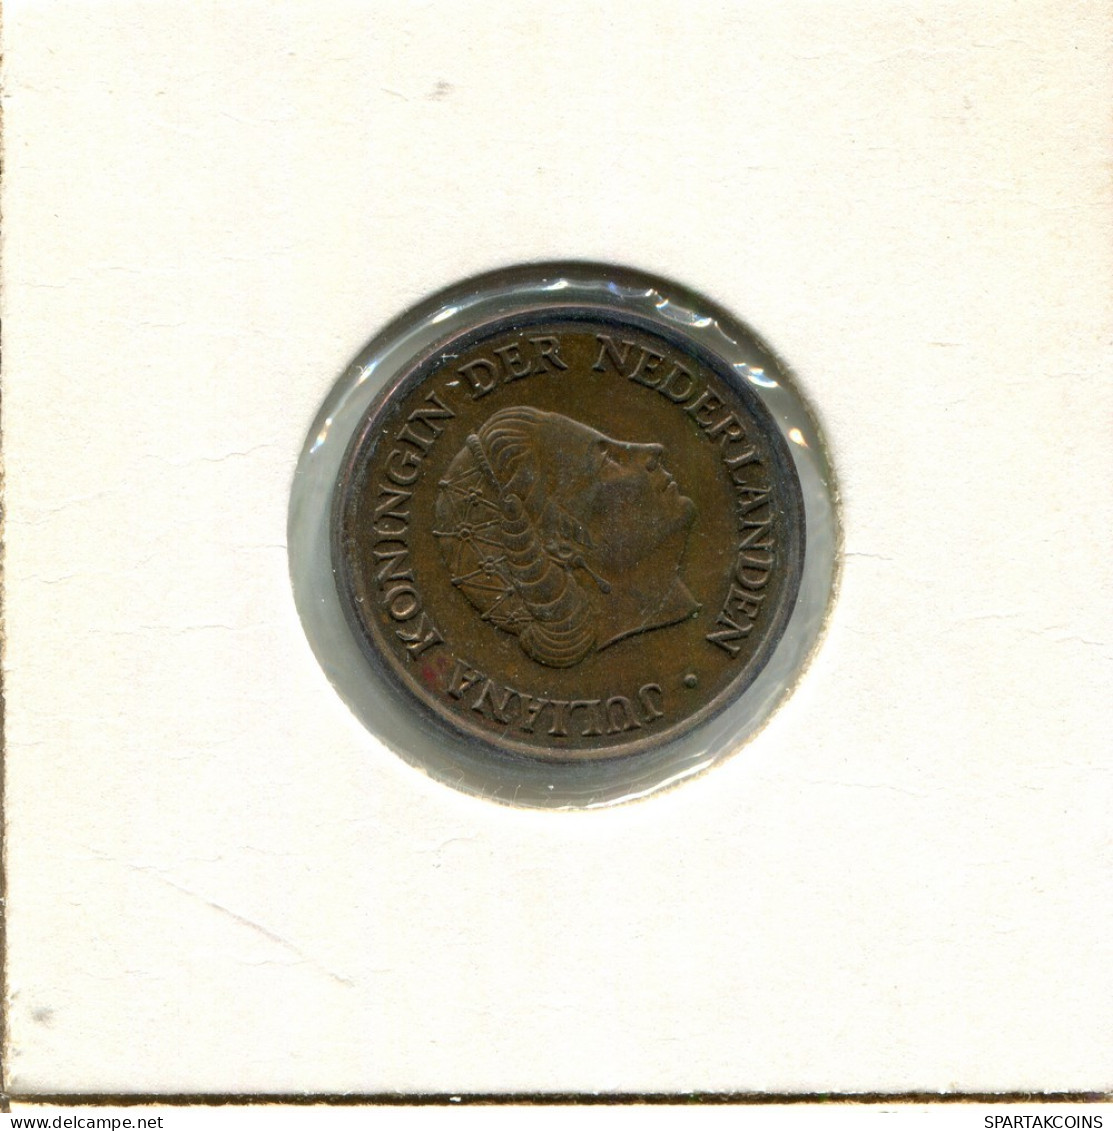 5 CENTS 1964 NEERLANDÉS NETHERLANDS Moneda #AU465.E.A - 1948-1980 : Juliana